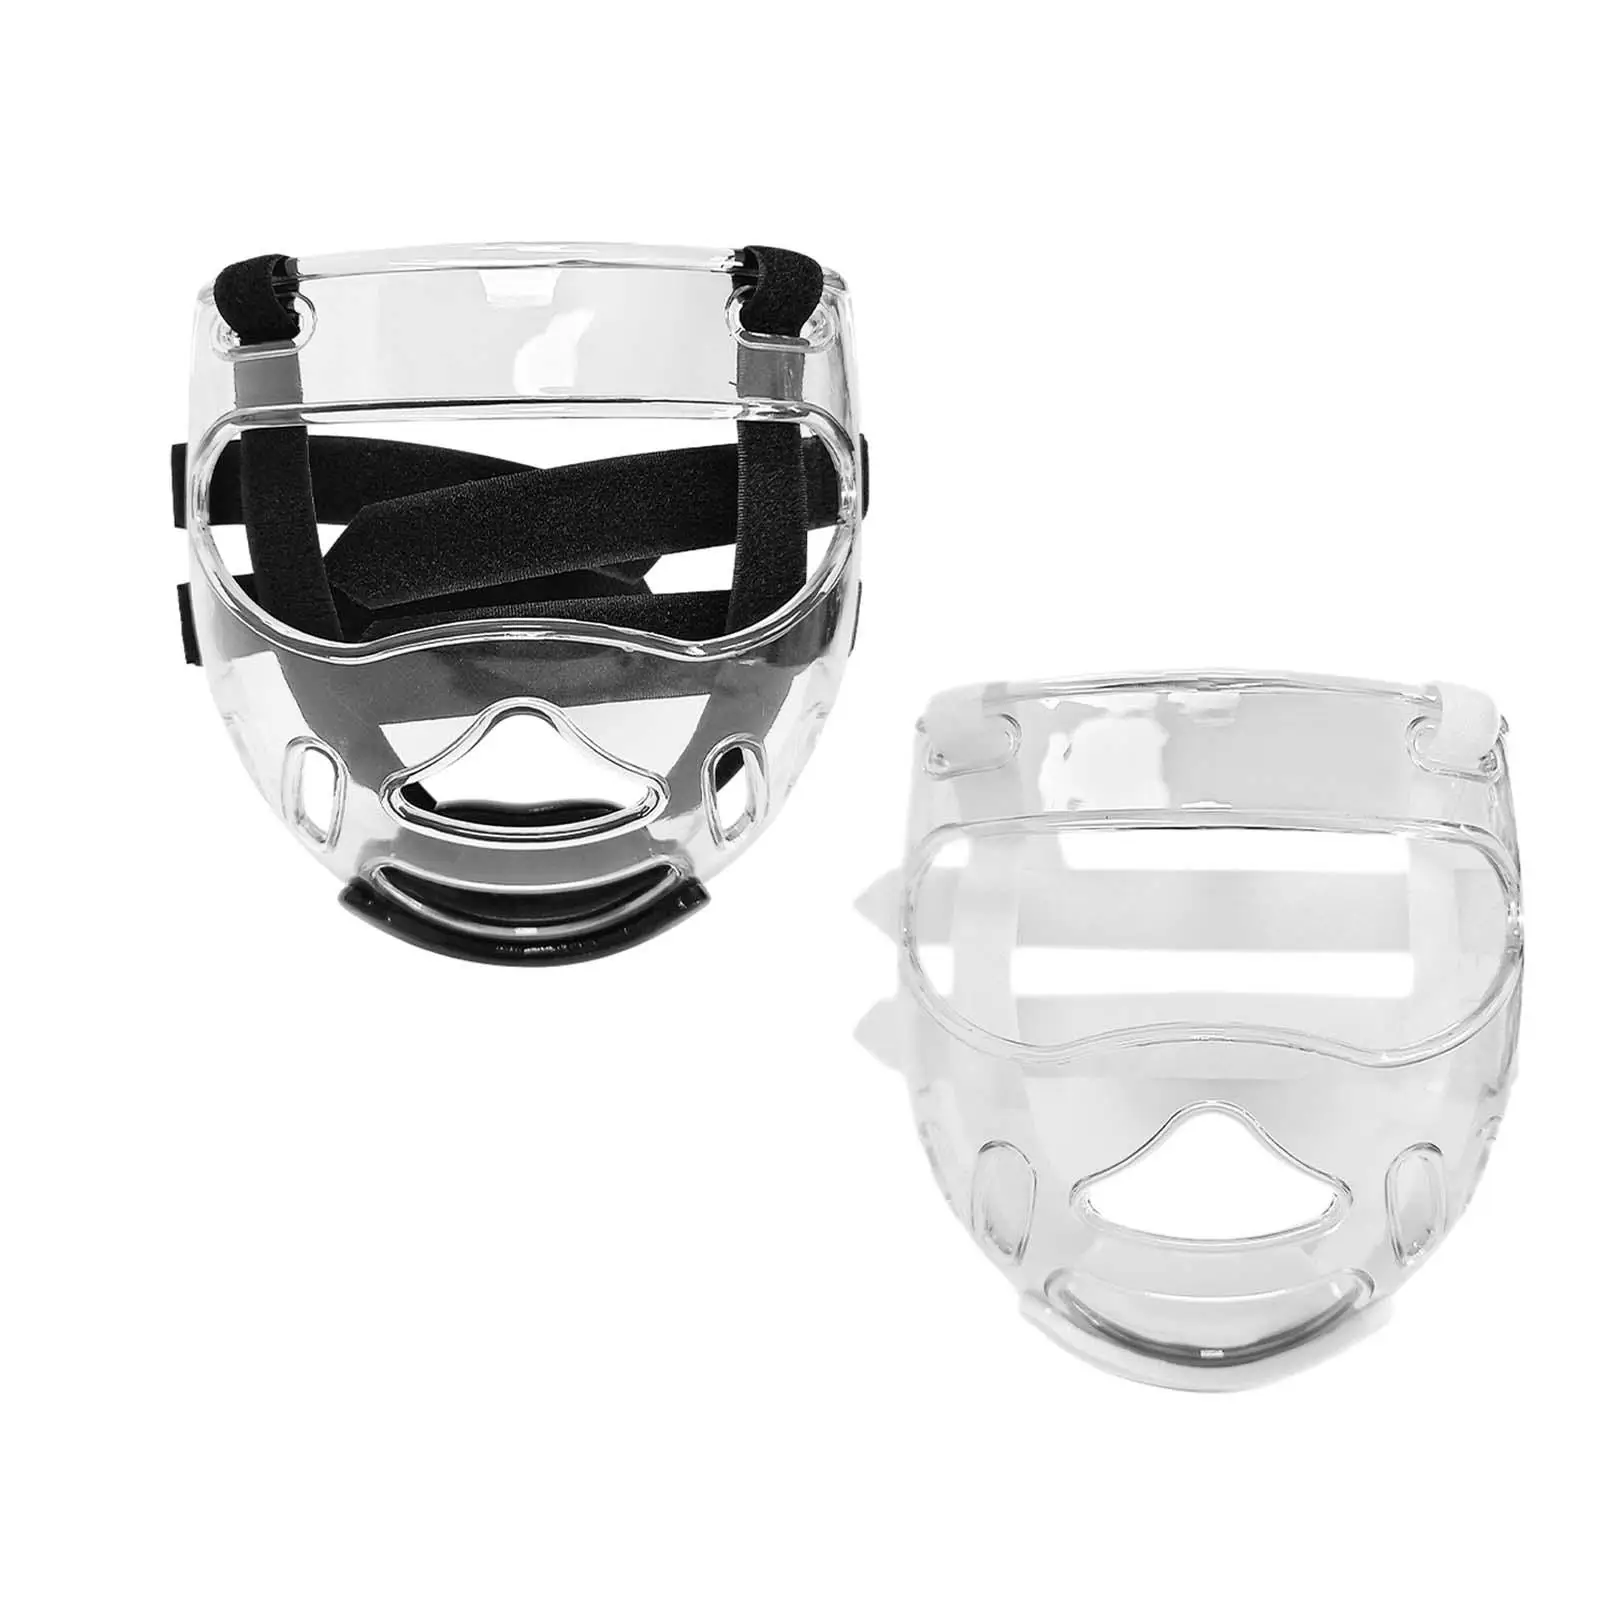 Taekwondo Face Mask Taekwondo Face Shield Breathable Face Protection Cover for Karate Boxin Sanda Muay Thai Training Equipment